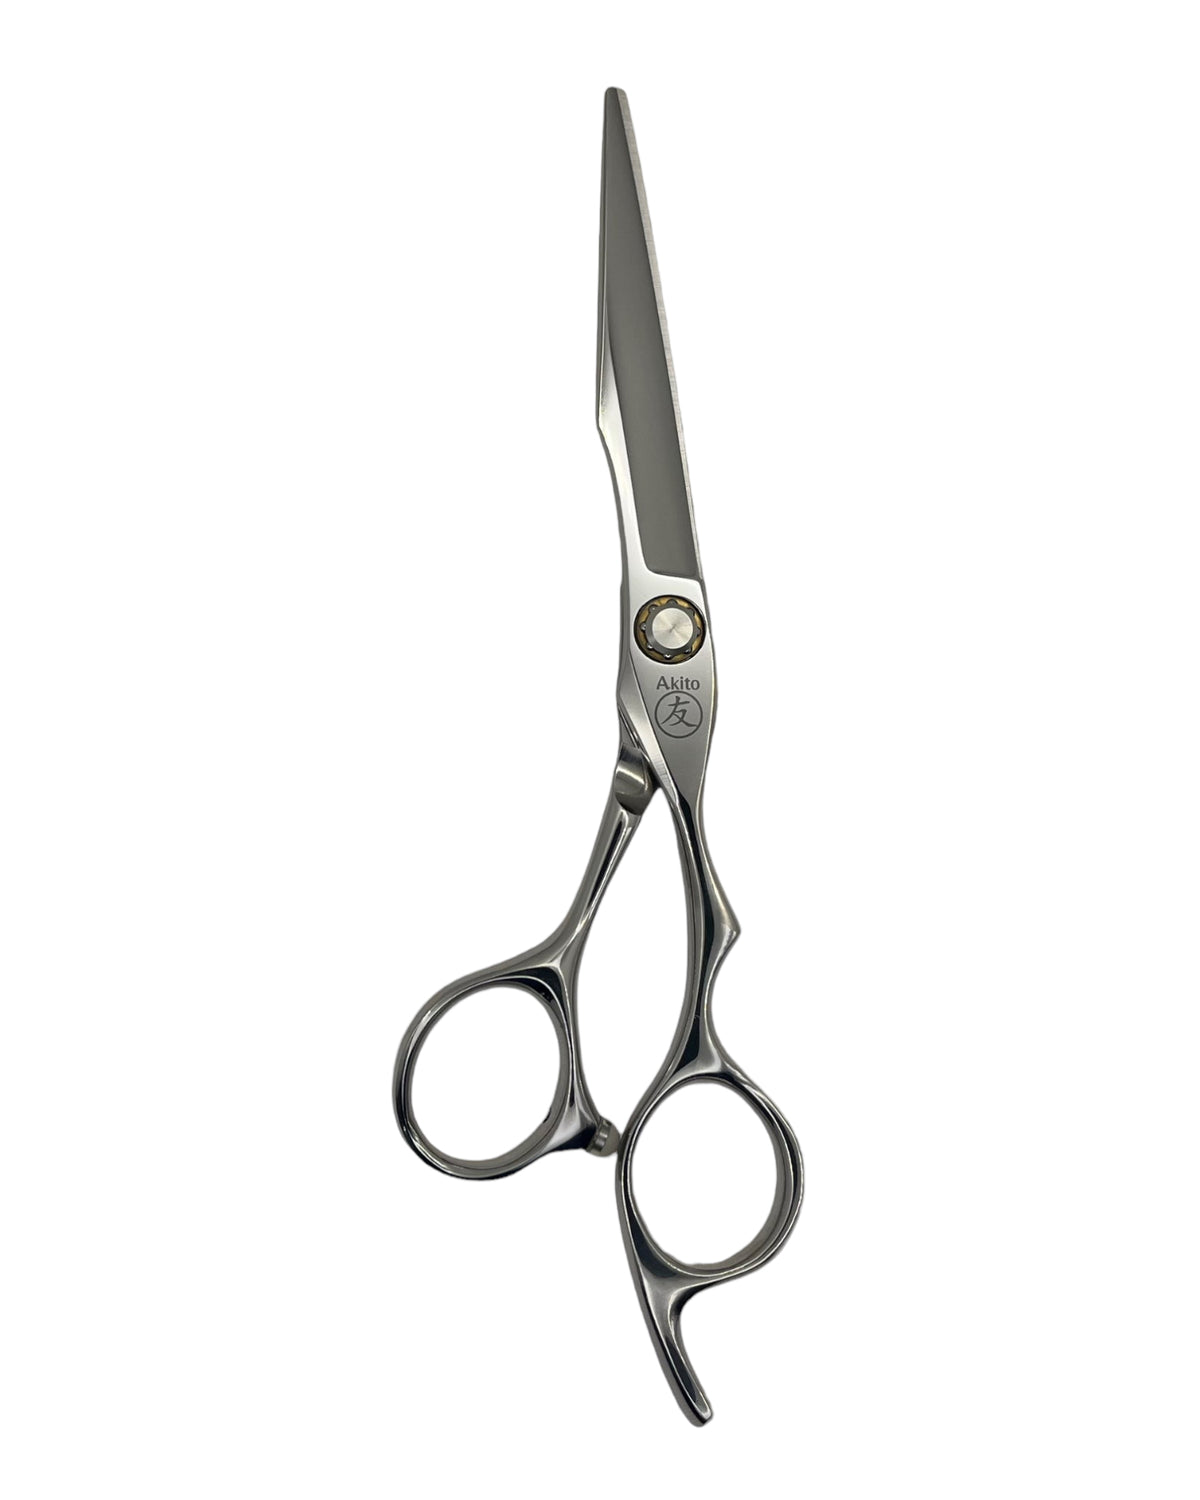 Katana 6.0 inch hair cutting scissors